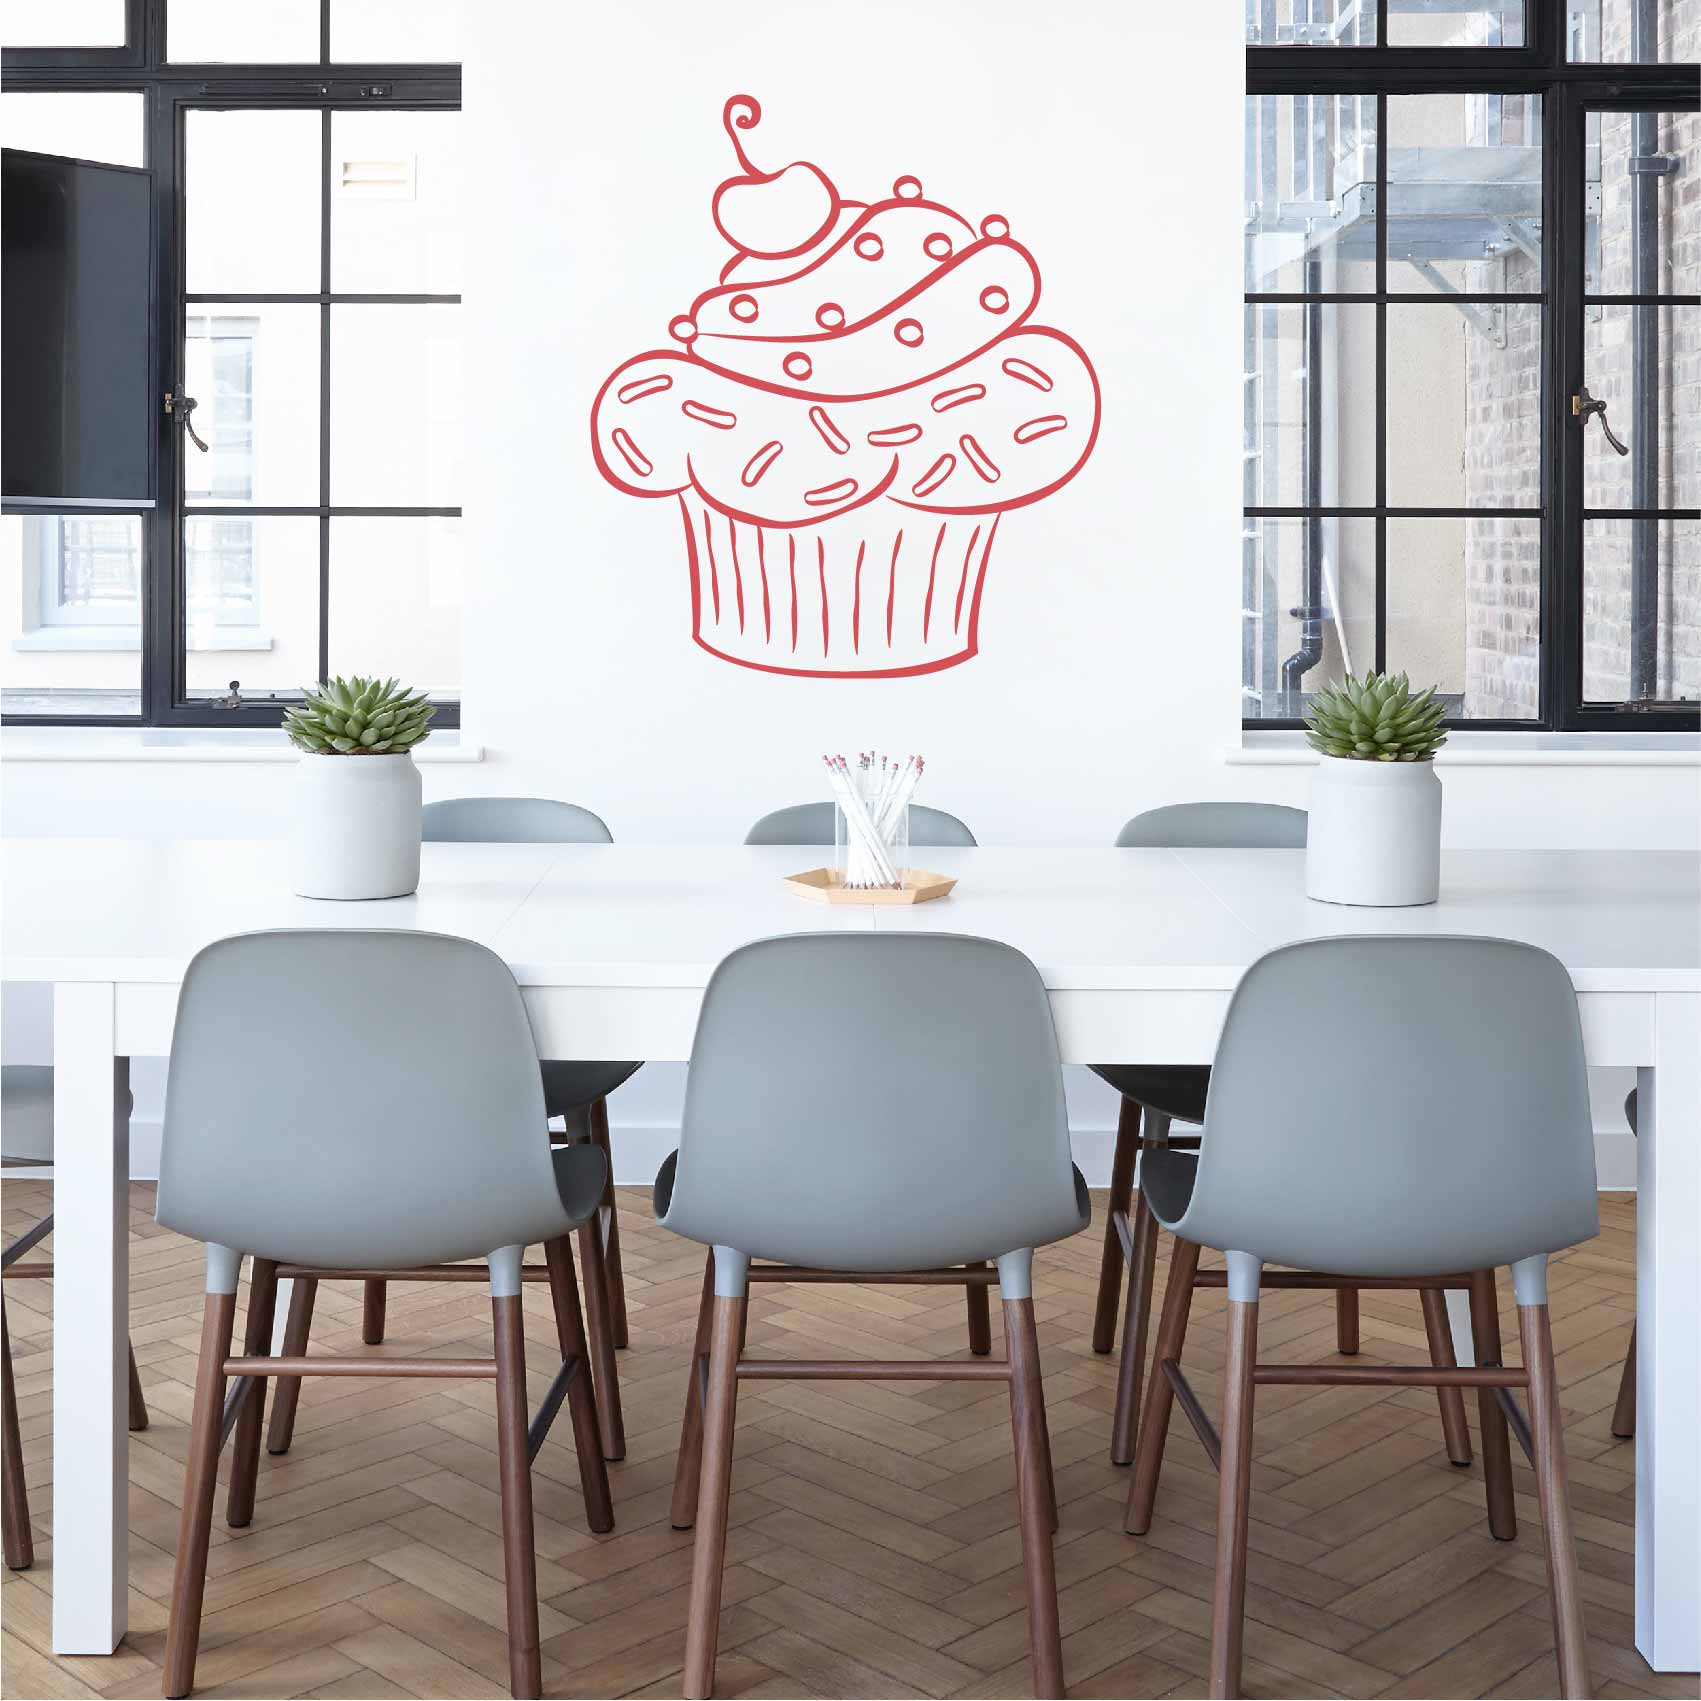 stickers-cupcake-cerise-ref21cupcake-autocollant-muraux-cuisine-salle-a-manger-salon-sticker-mural-deco-gateau-cupcakes-gateaux